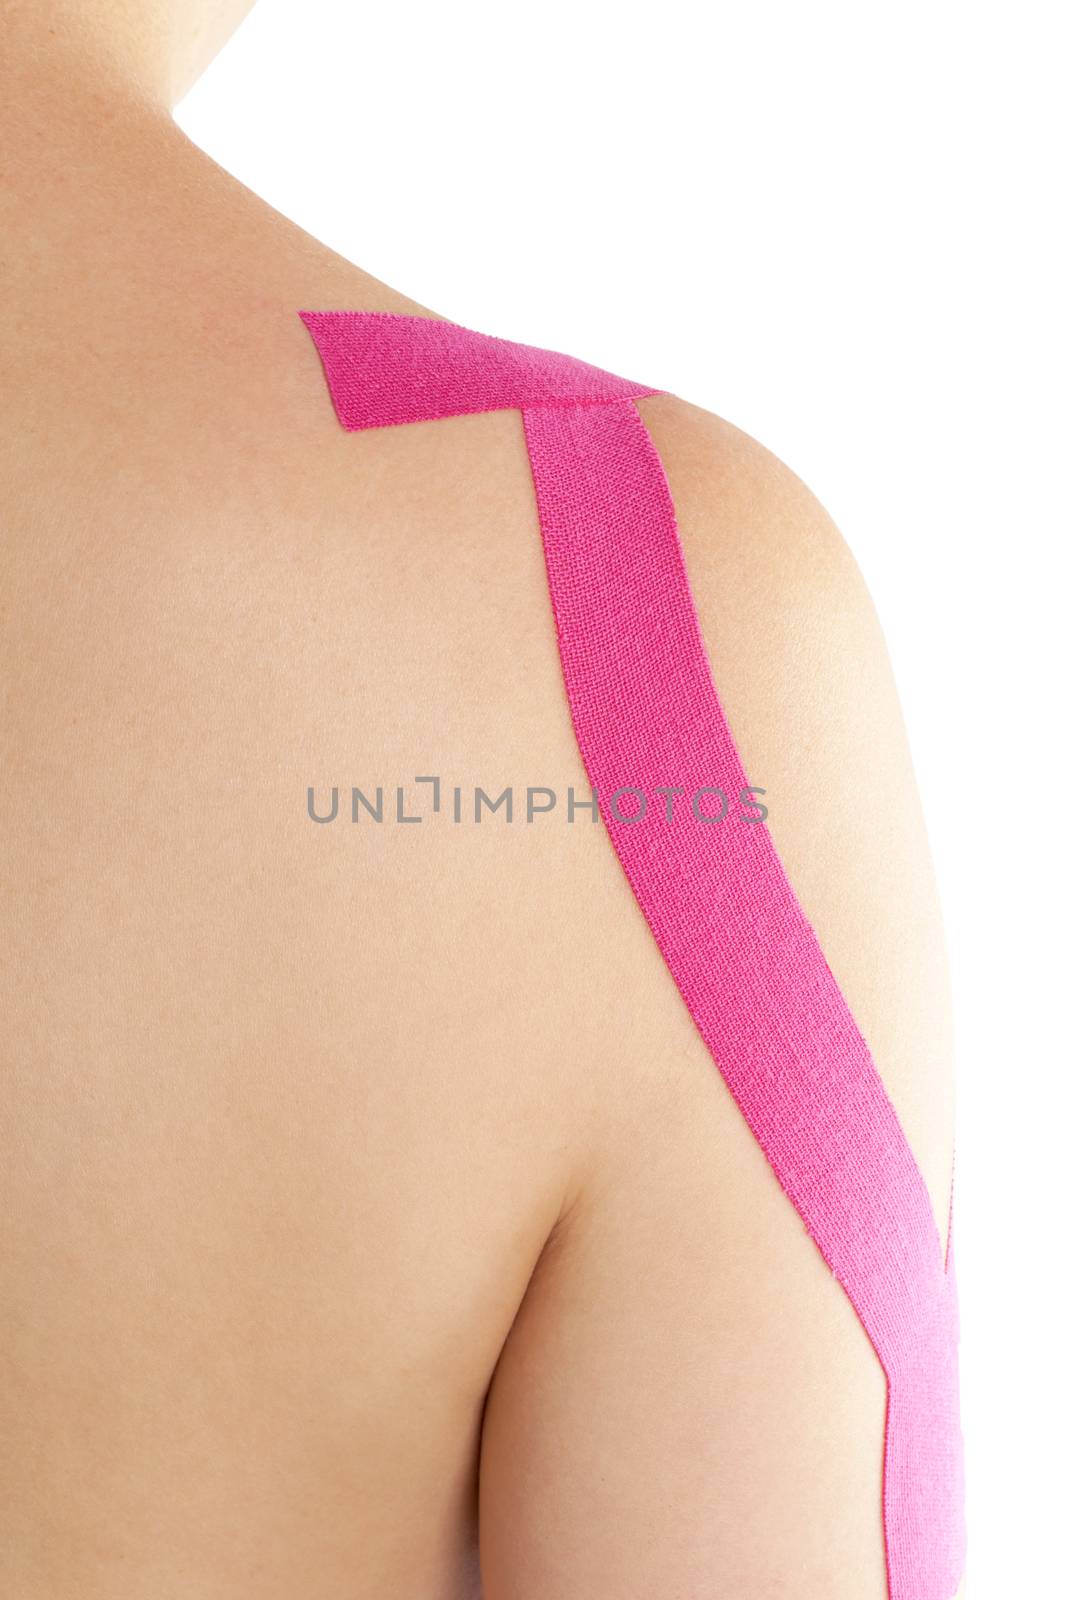 Kinesio tape on female shoulder. by eskymaks